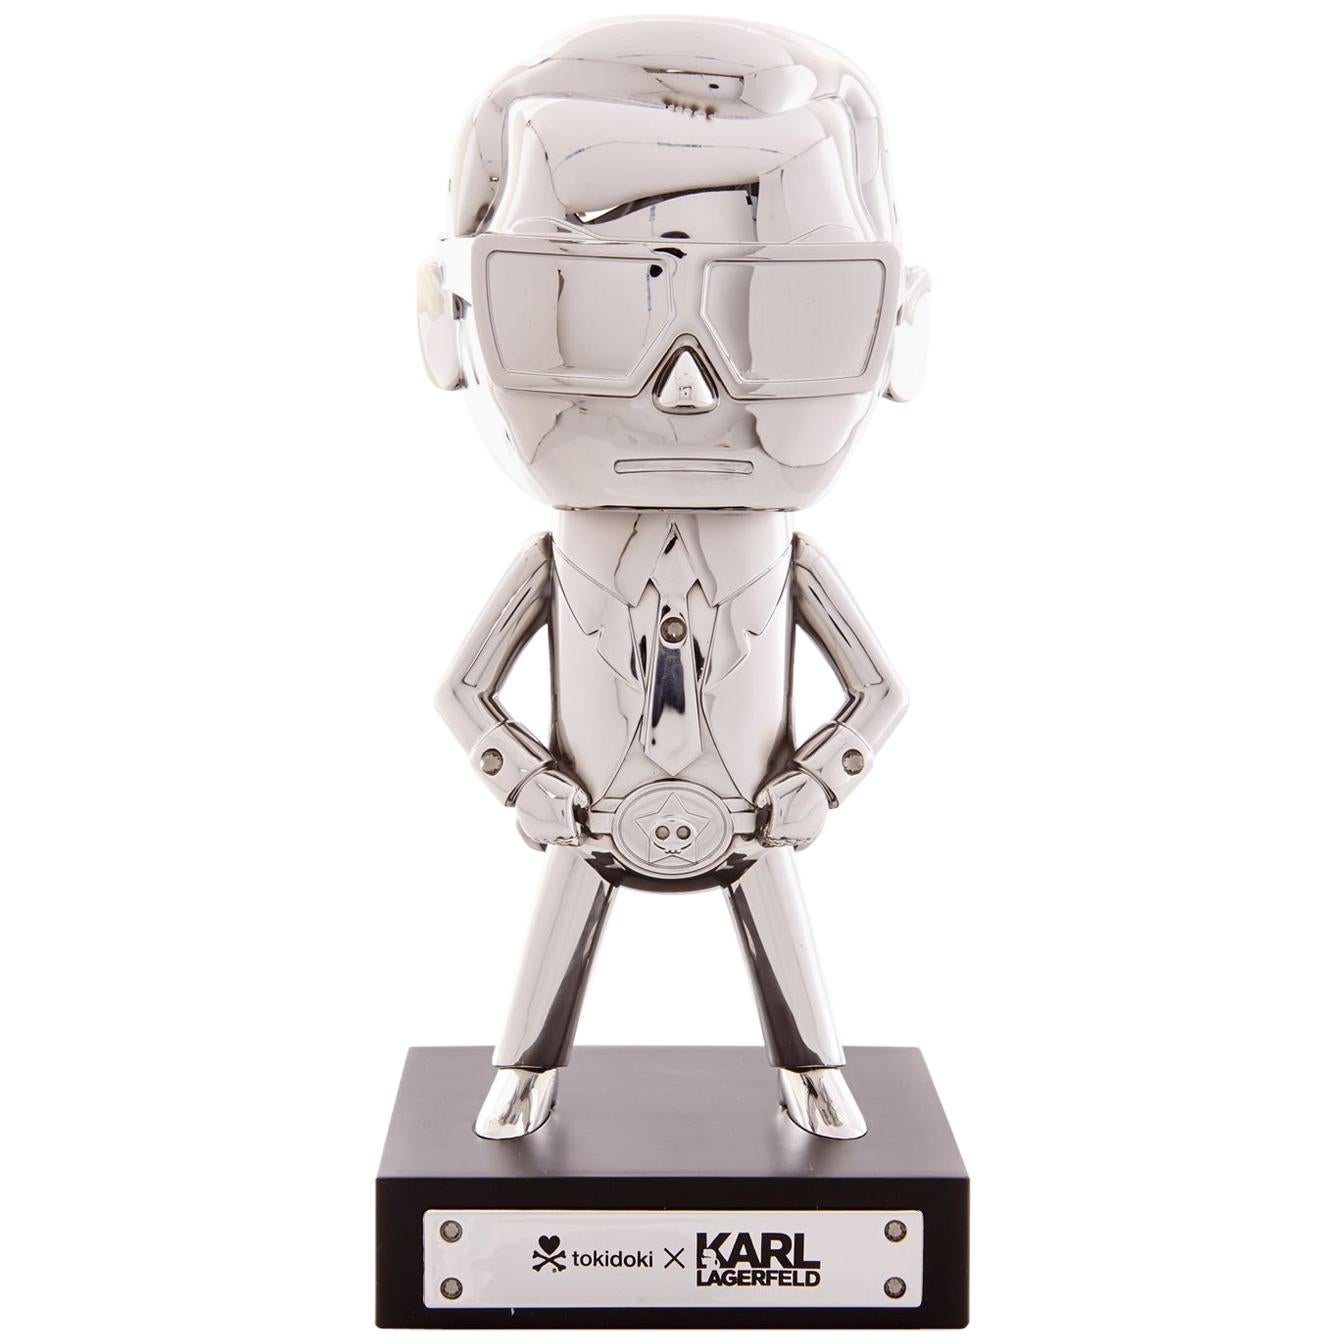 KARL LAGERFELD x Tokidoki Limited Edition Figurine